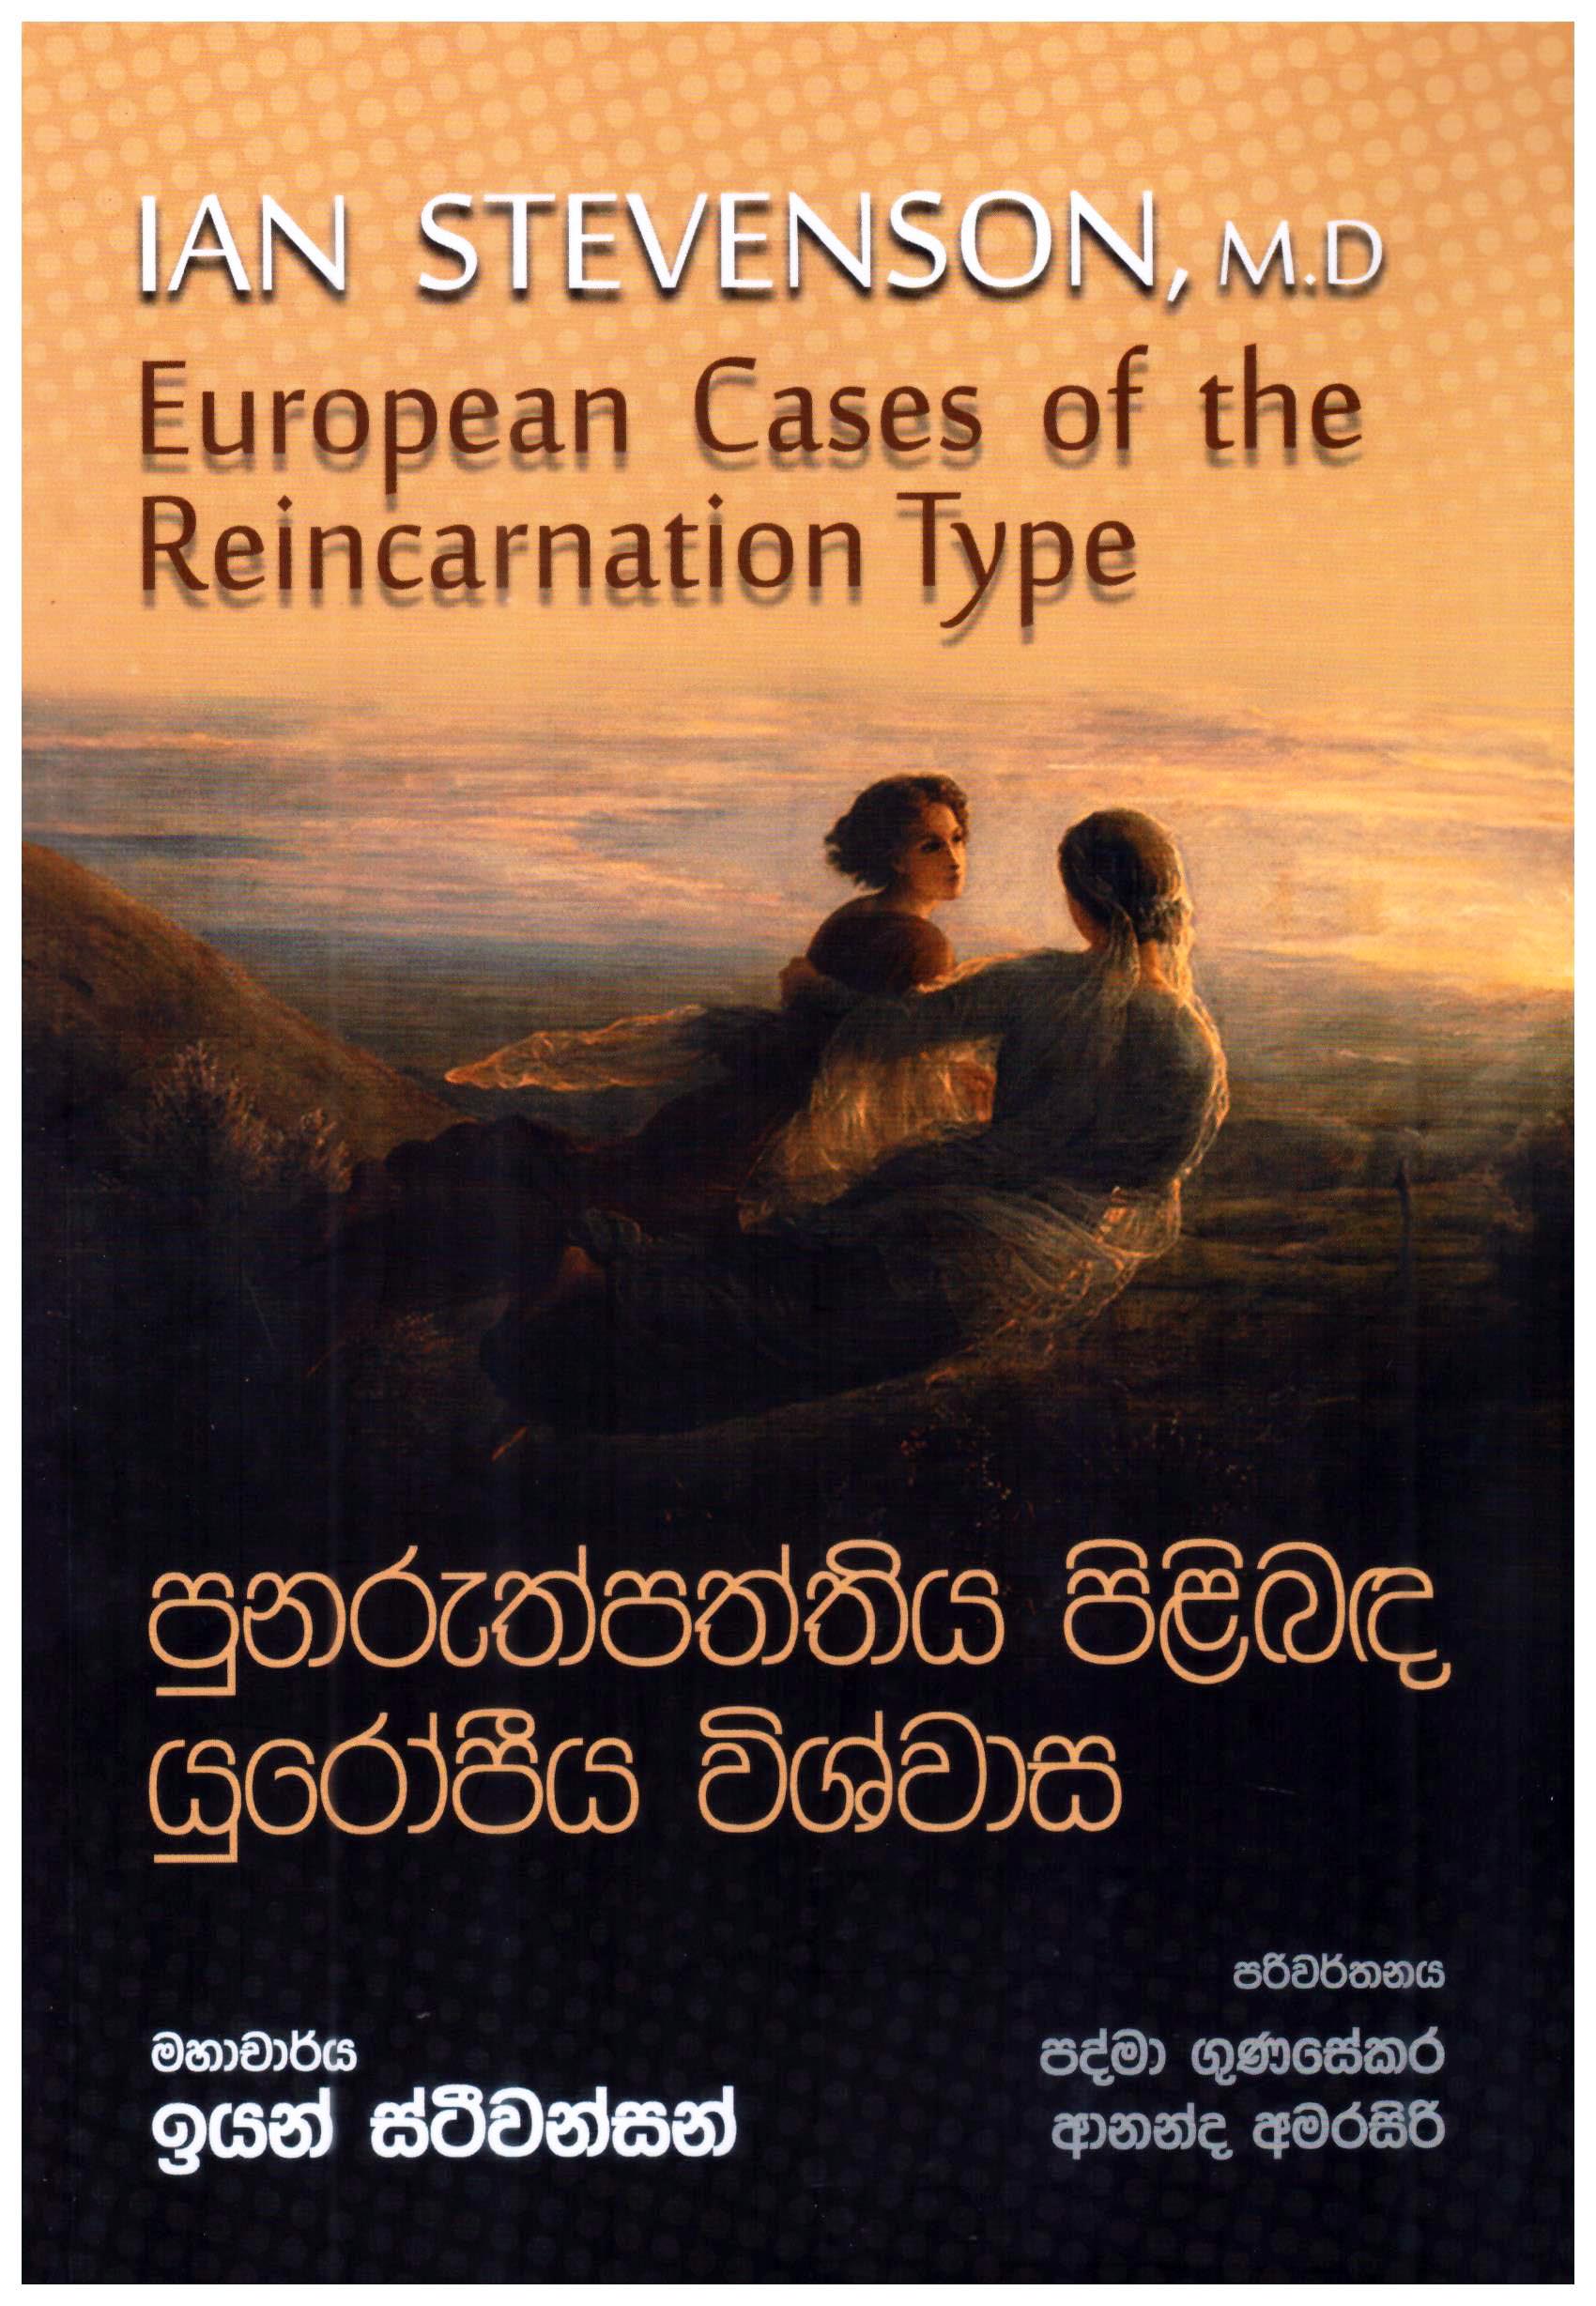 Punaruthpaththiya Pilibada European Viswasa Translation of European Cases of The Reincarnation Type By Ian Stevenson, M.D